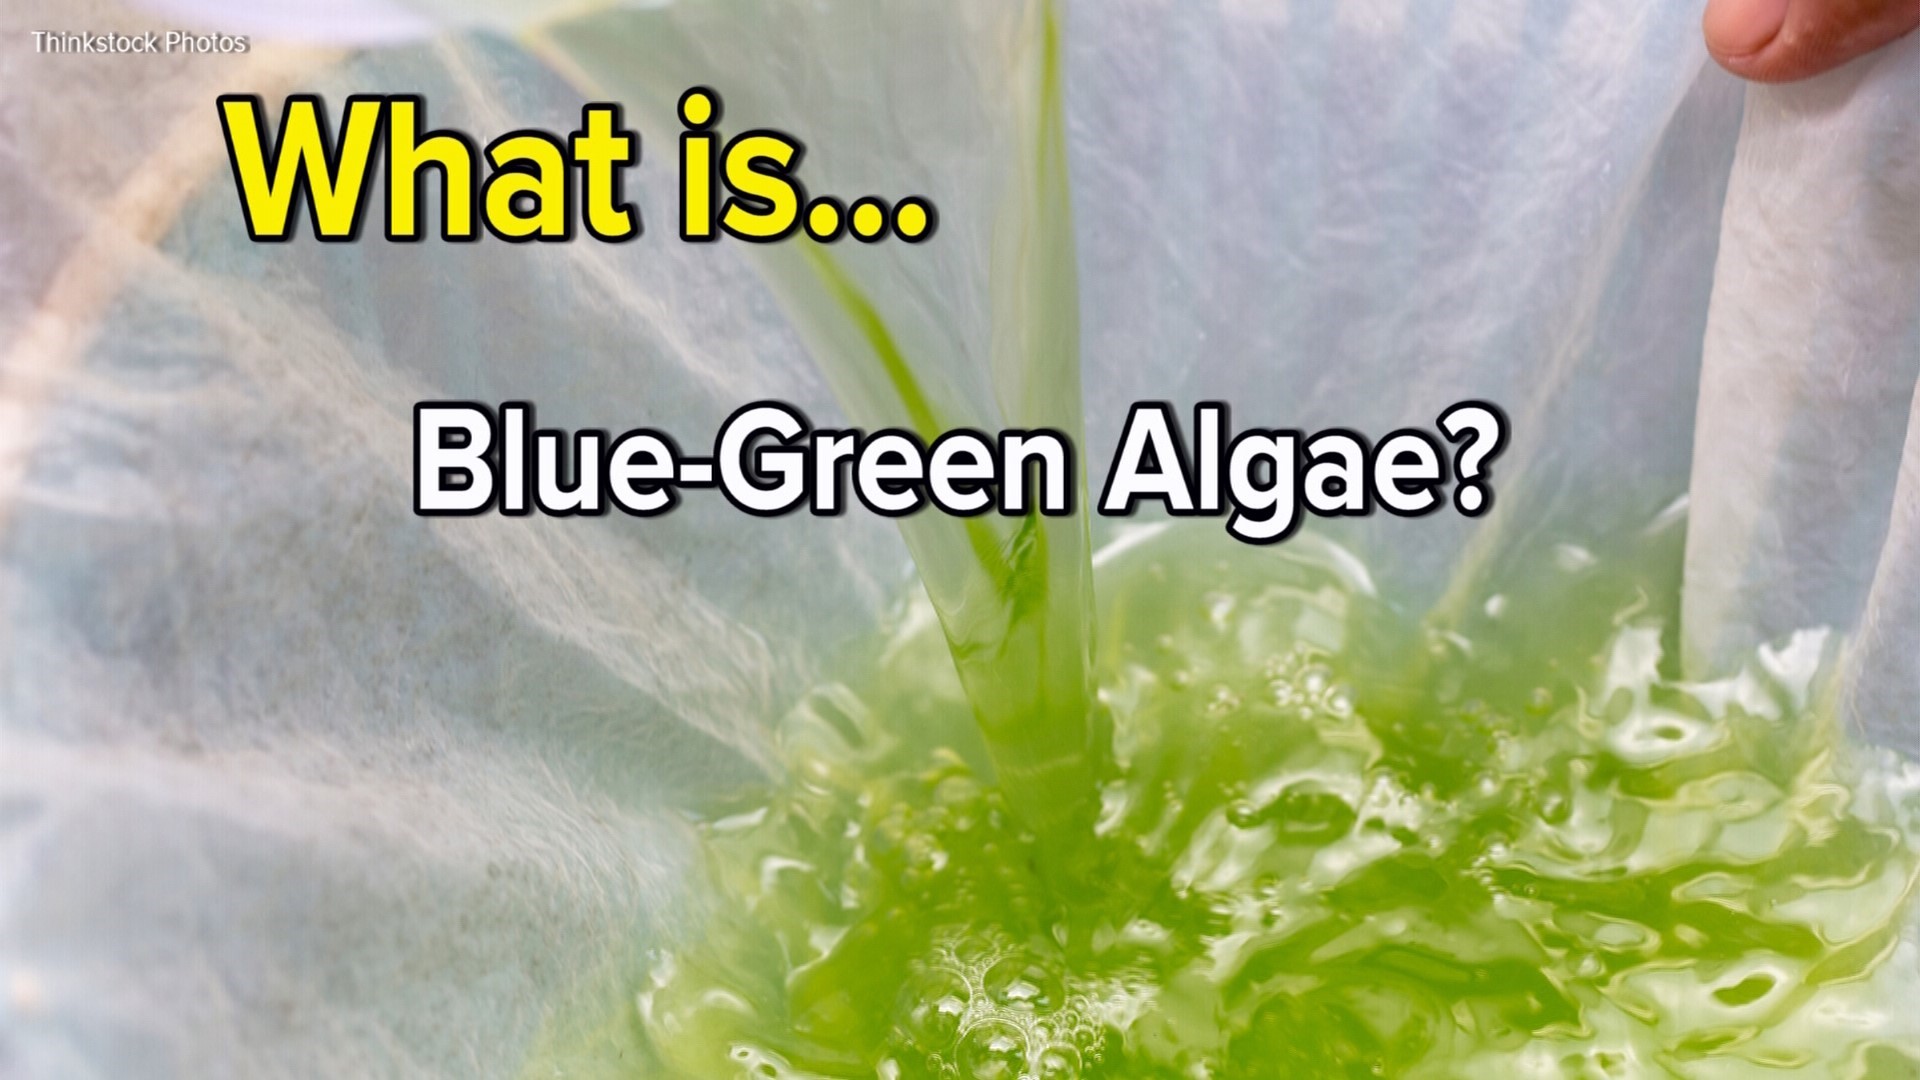 What is blue-green algae?